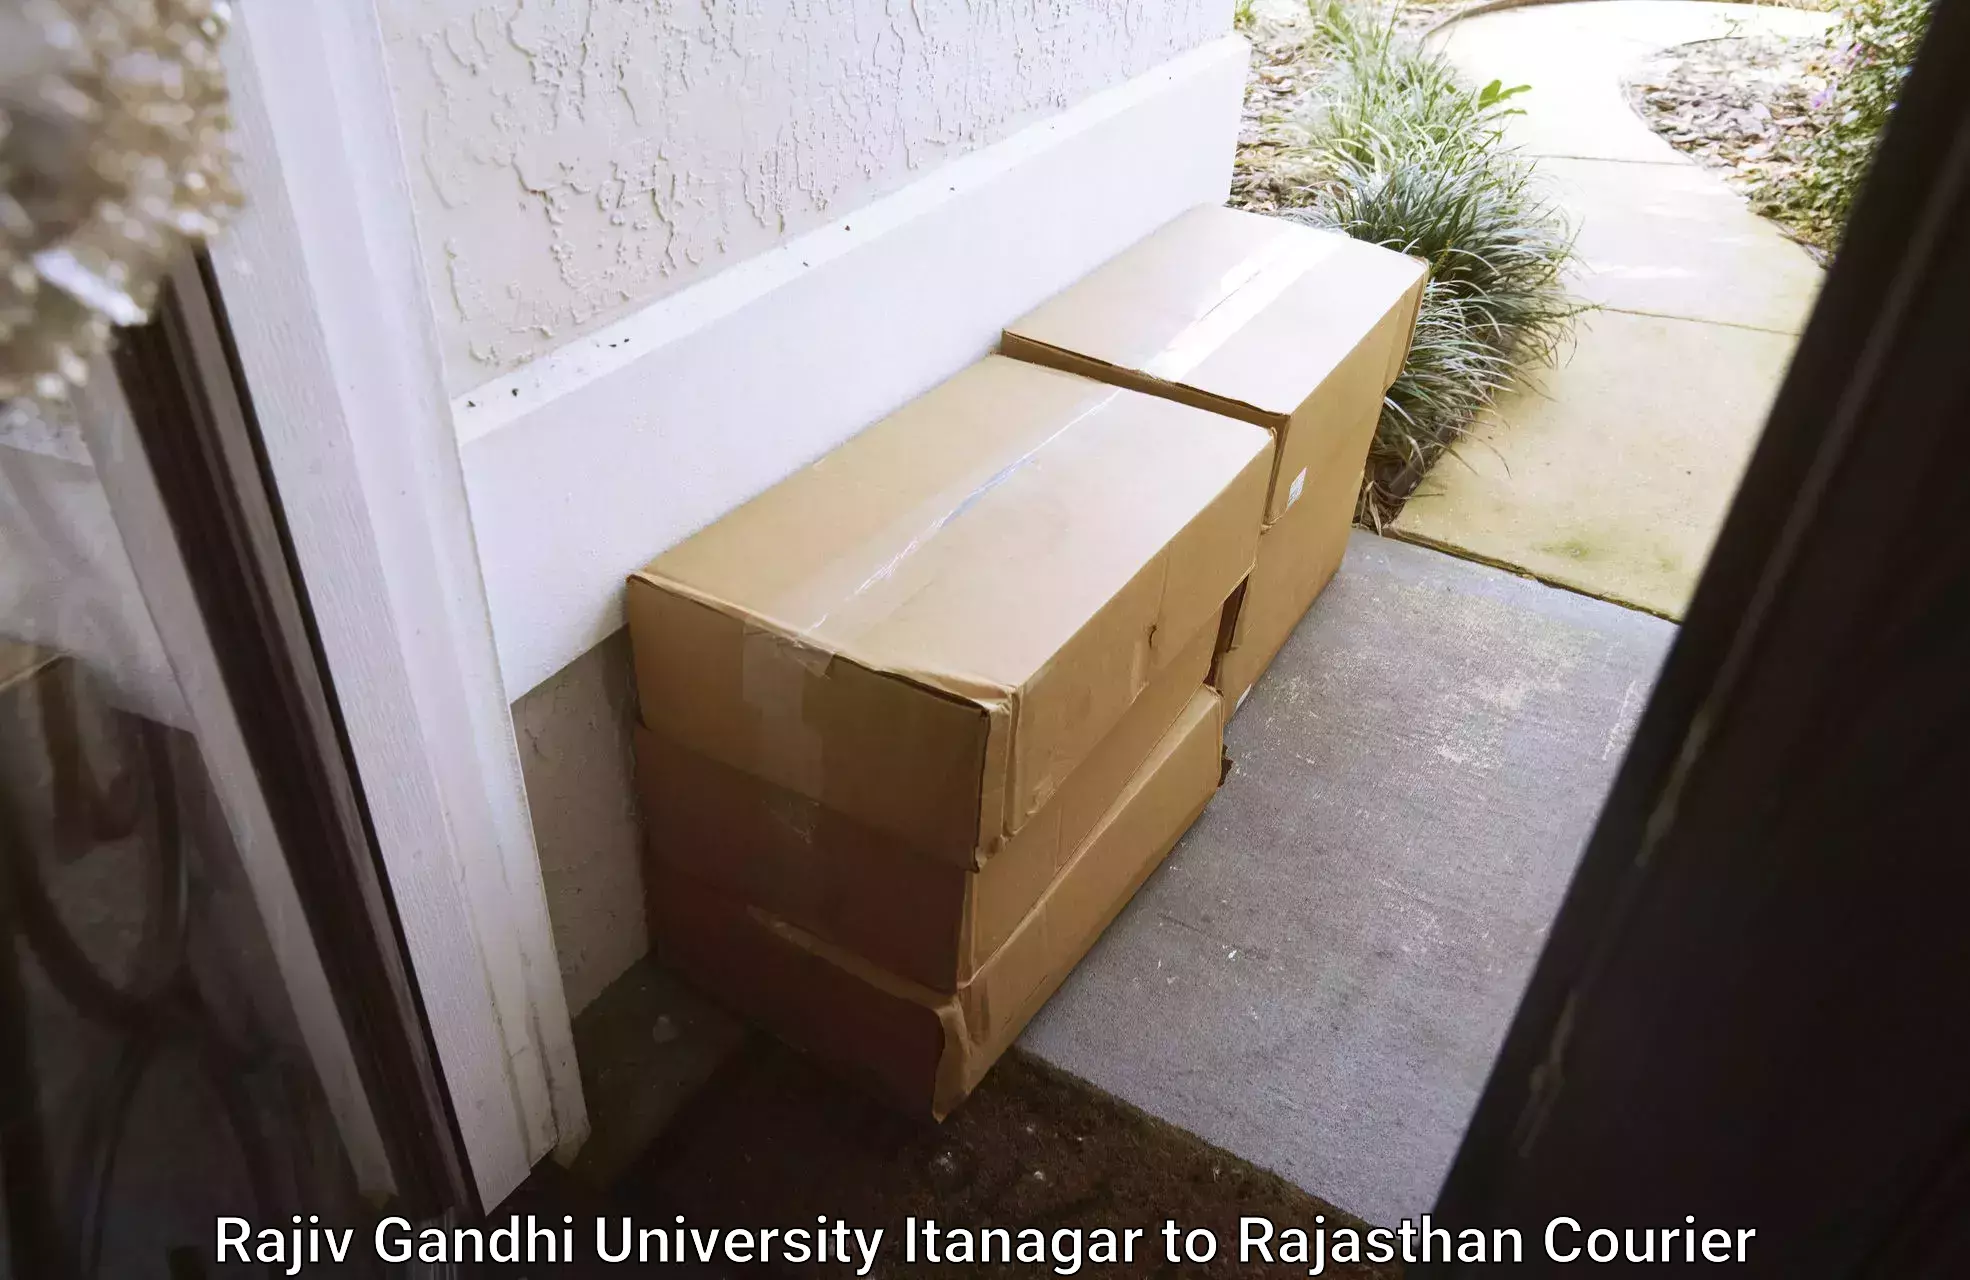 Express logistics providers Rajiv Gandhi University Itanagar to Pilani